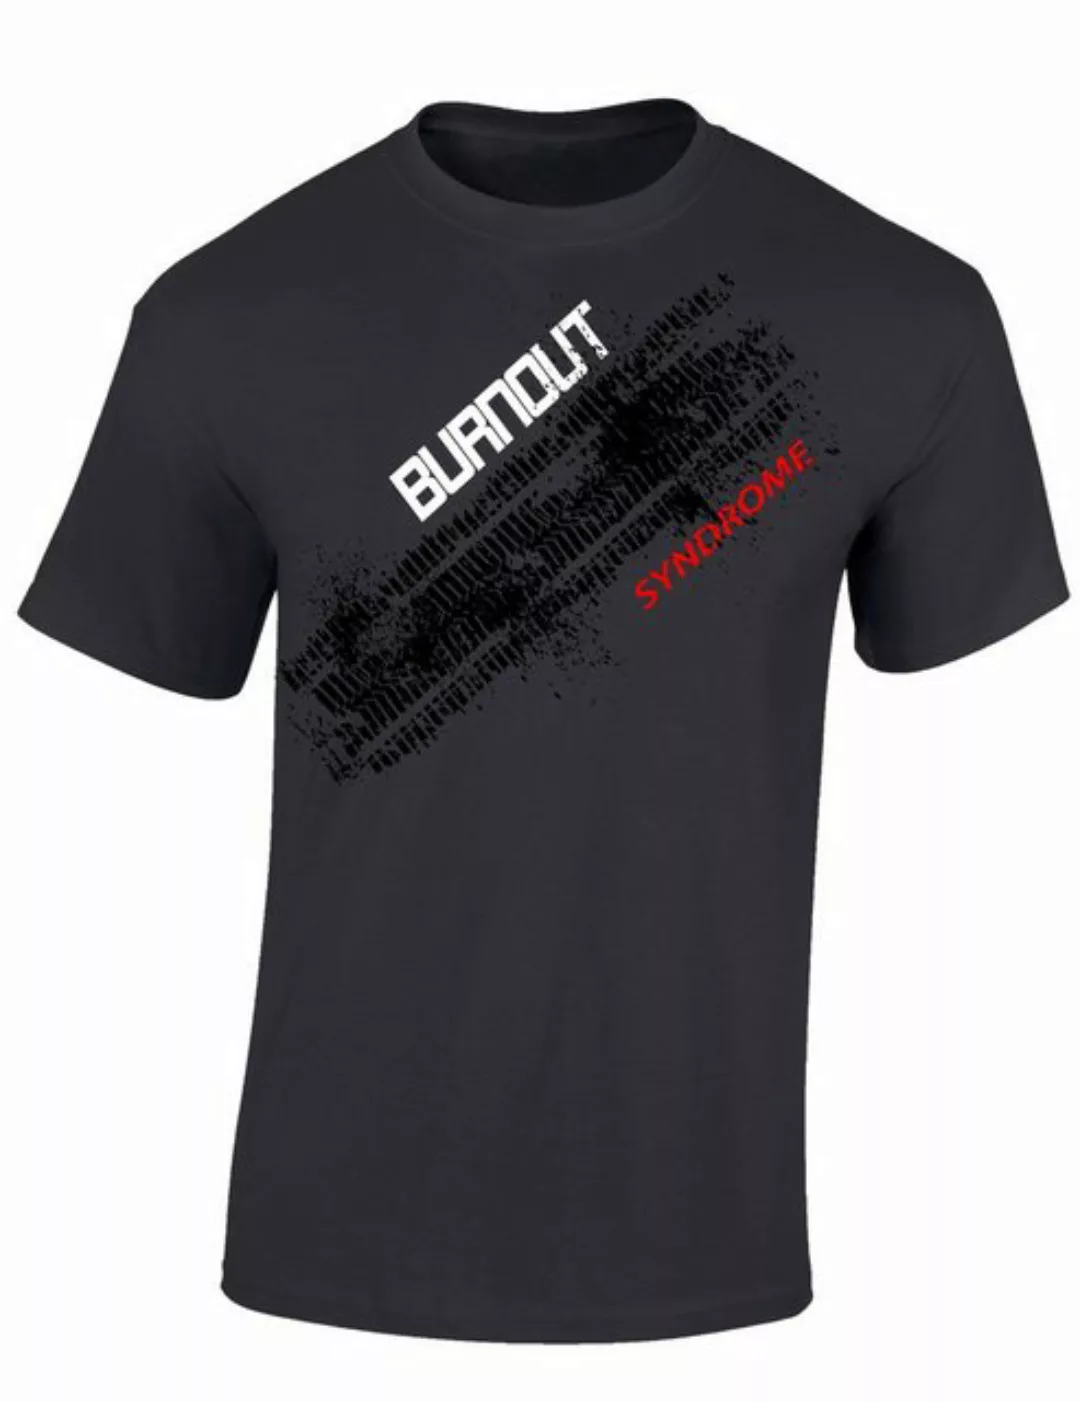 Baddery Print-Shirt Auto T-Shirt: "Burnout Syndrome" - Motorsport Tuning Au günstig online kaufen